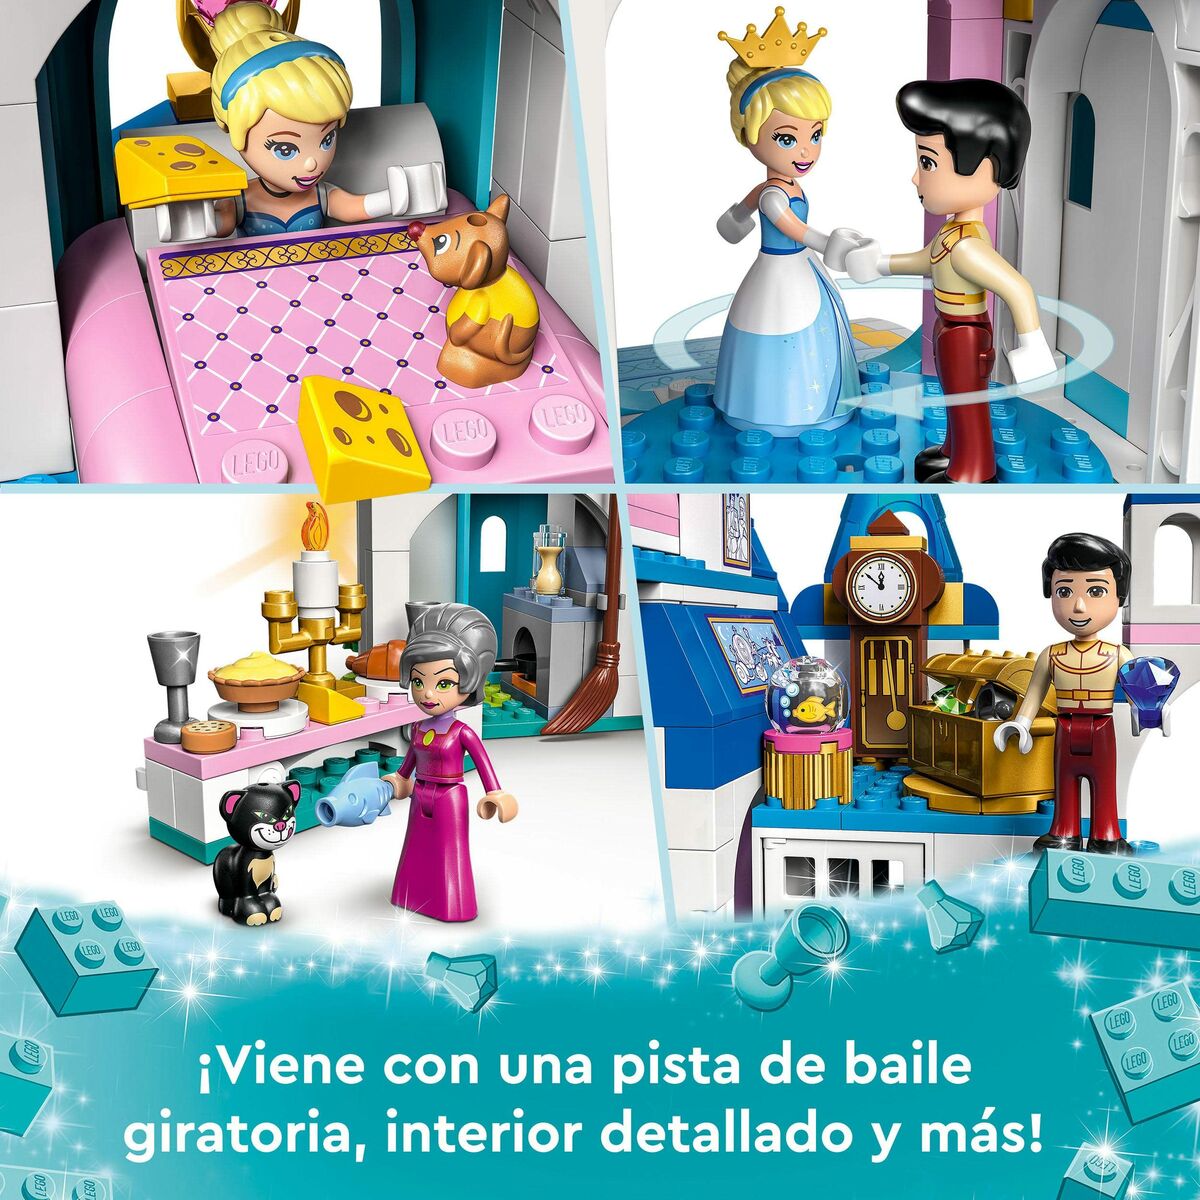 Lego 43206 Cinderella and Prince Charming's Castle (365 Daudzums)